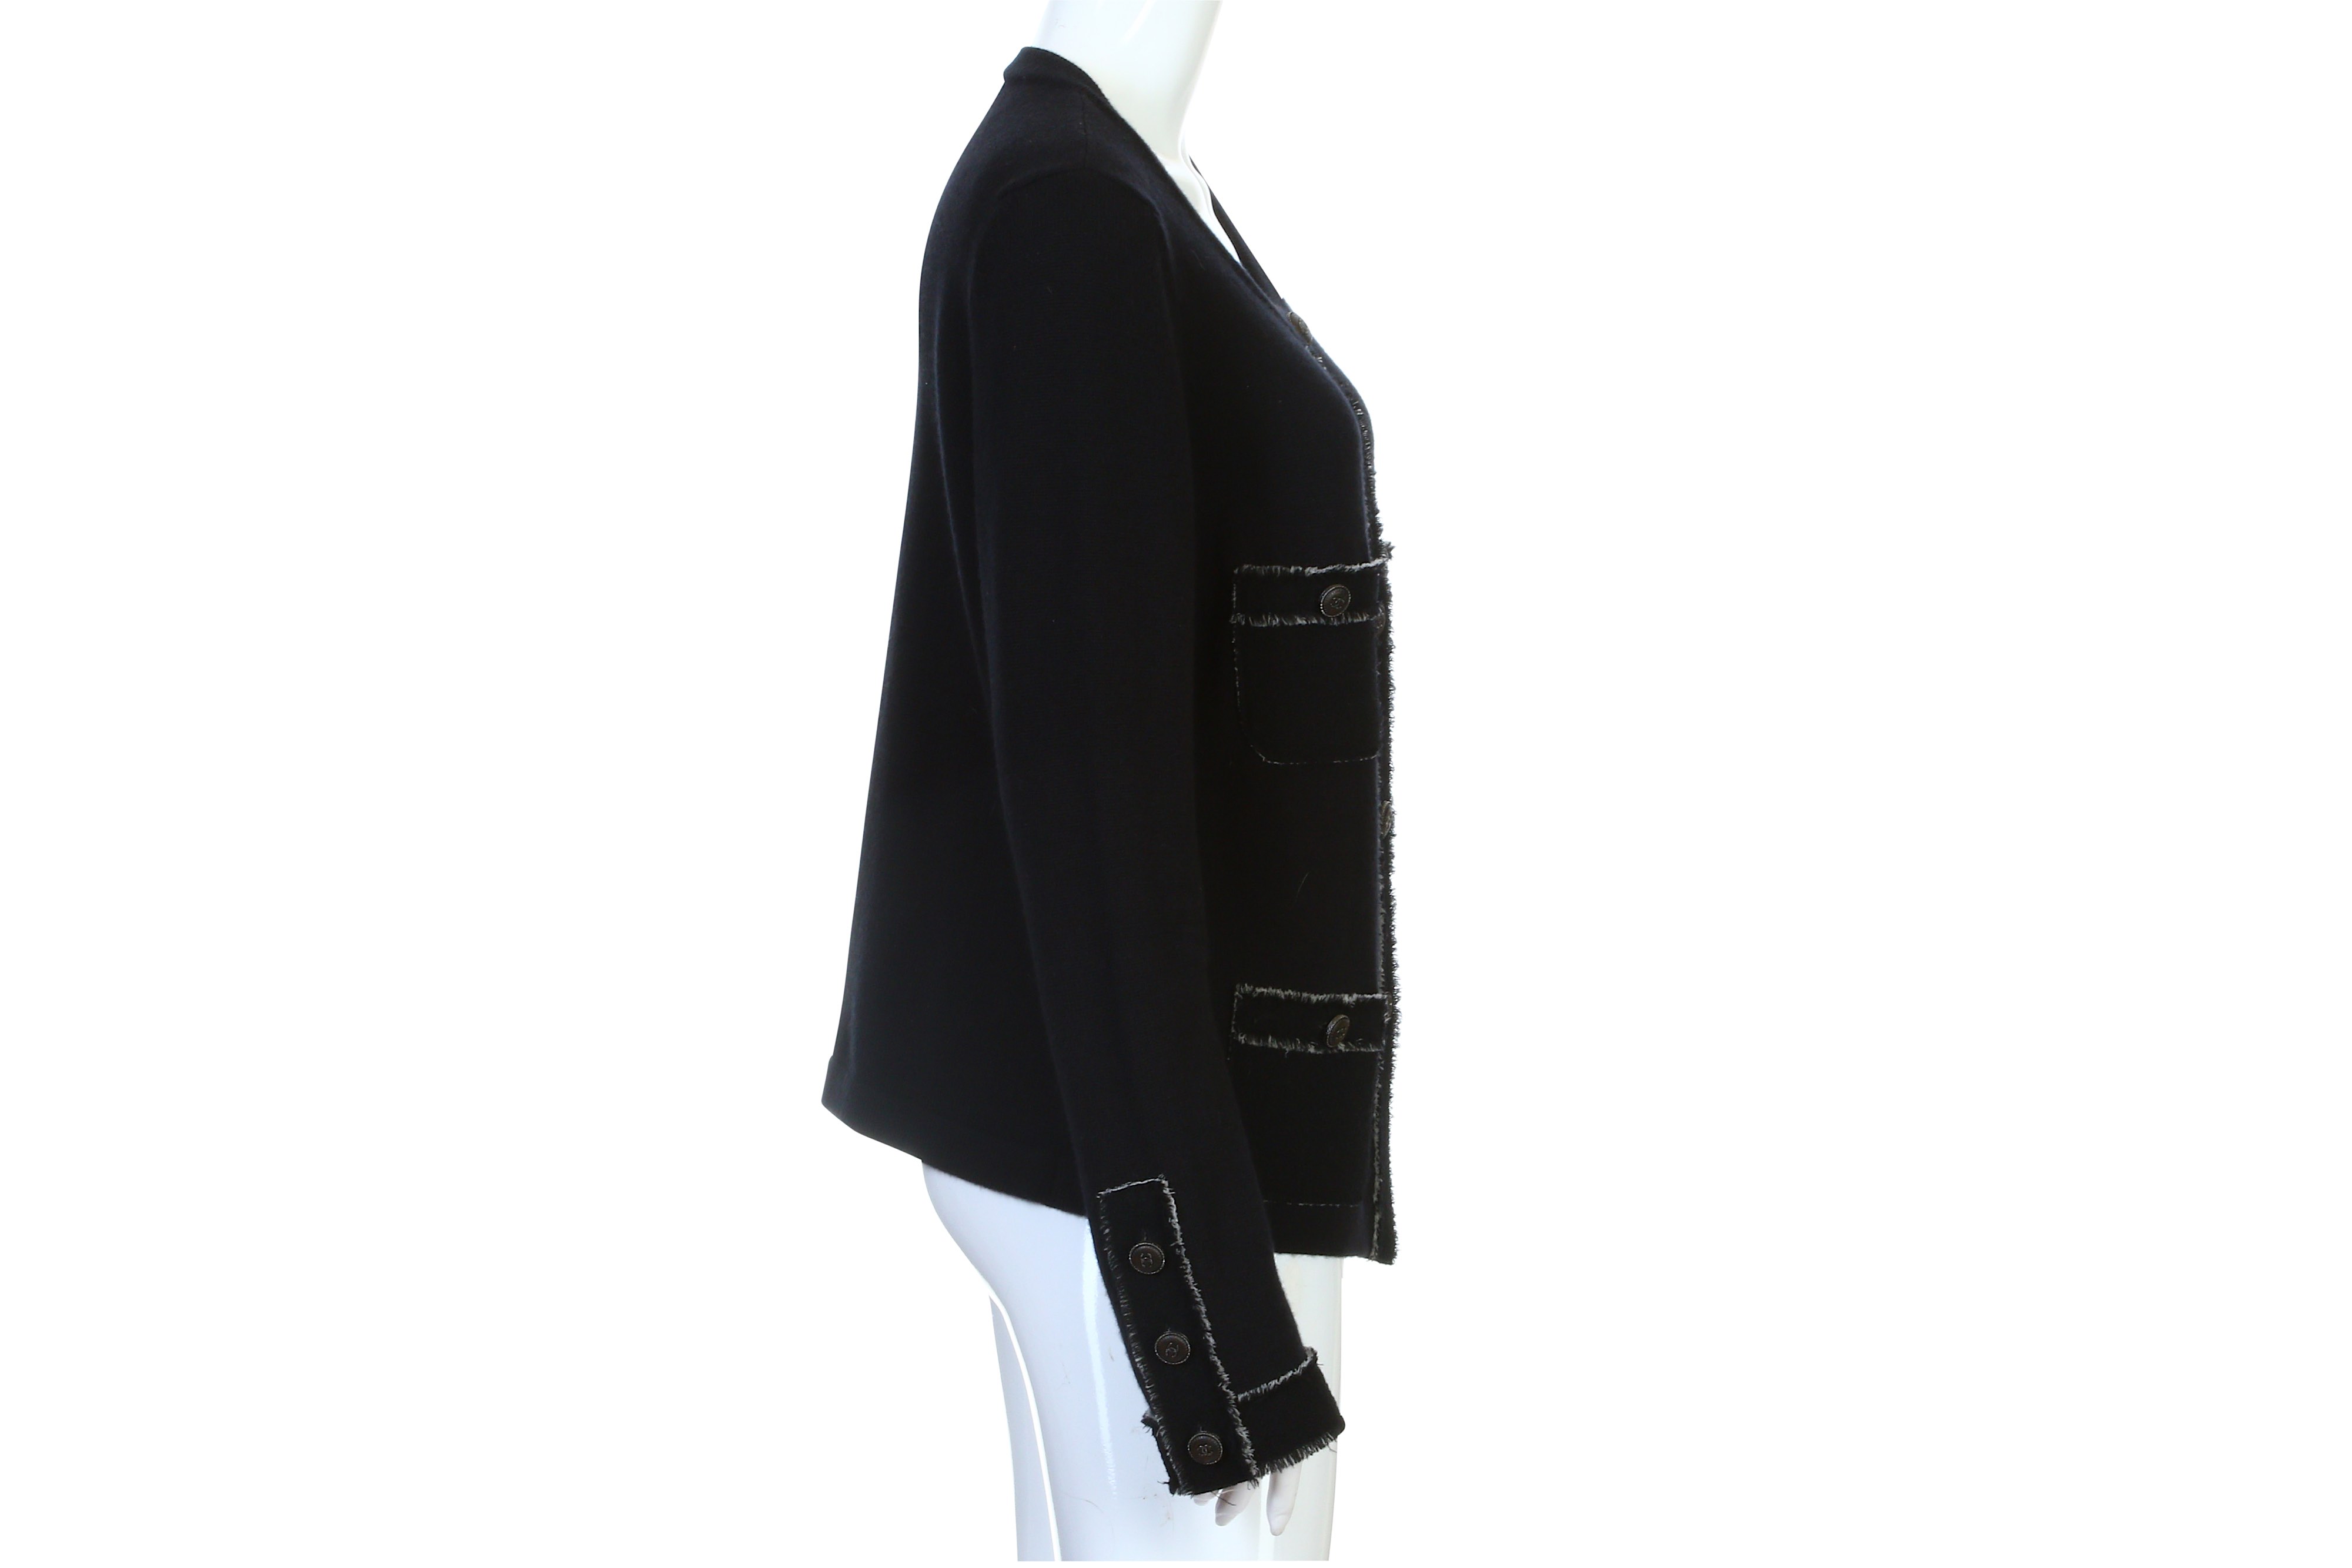 Chanel Black Cashmere Cardigan - Image 4 of 7